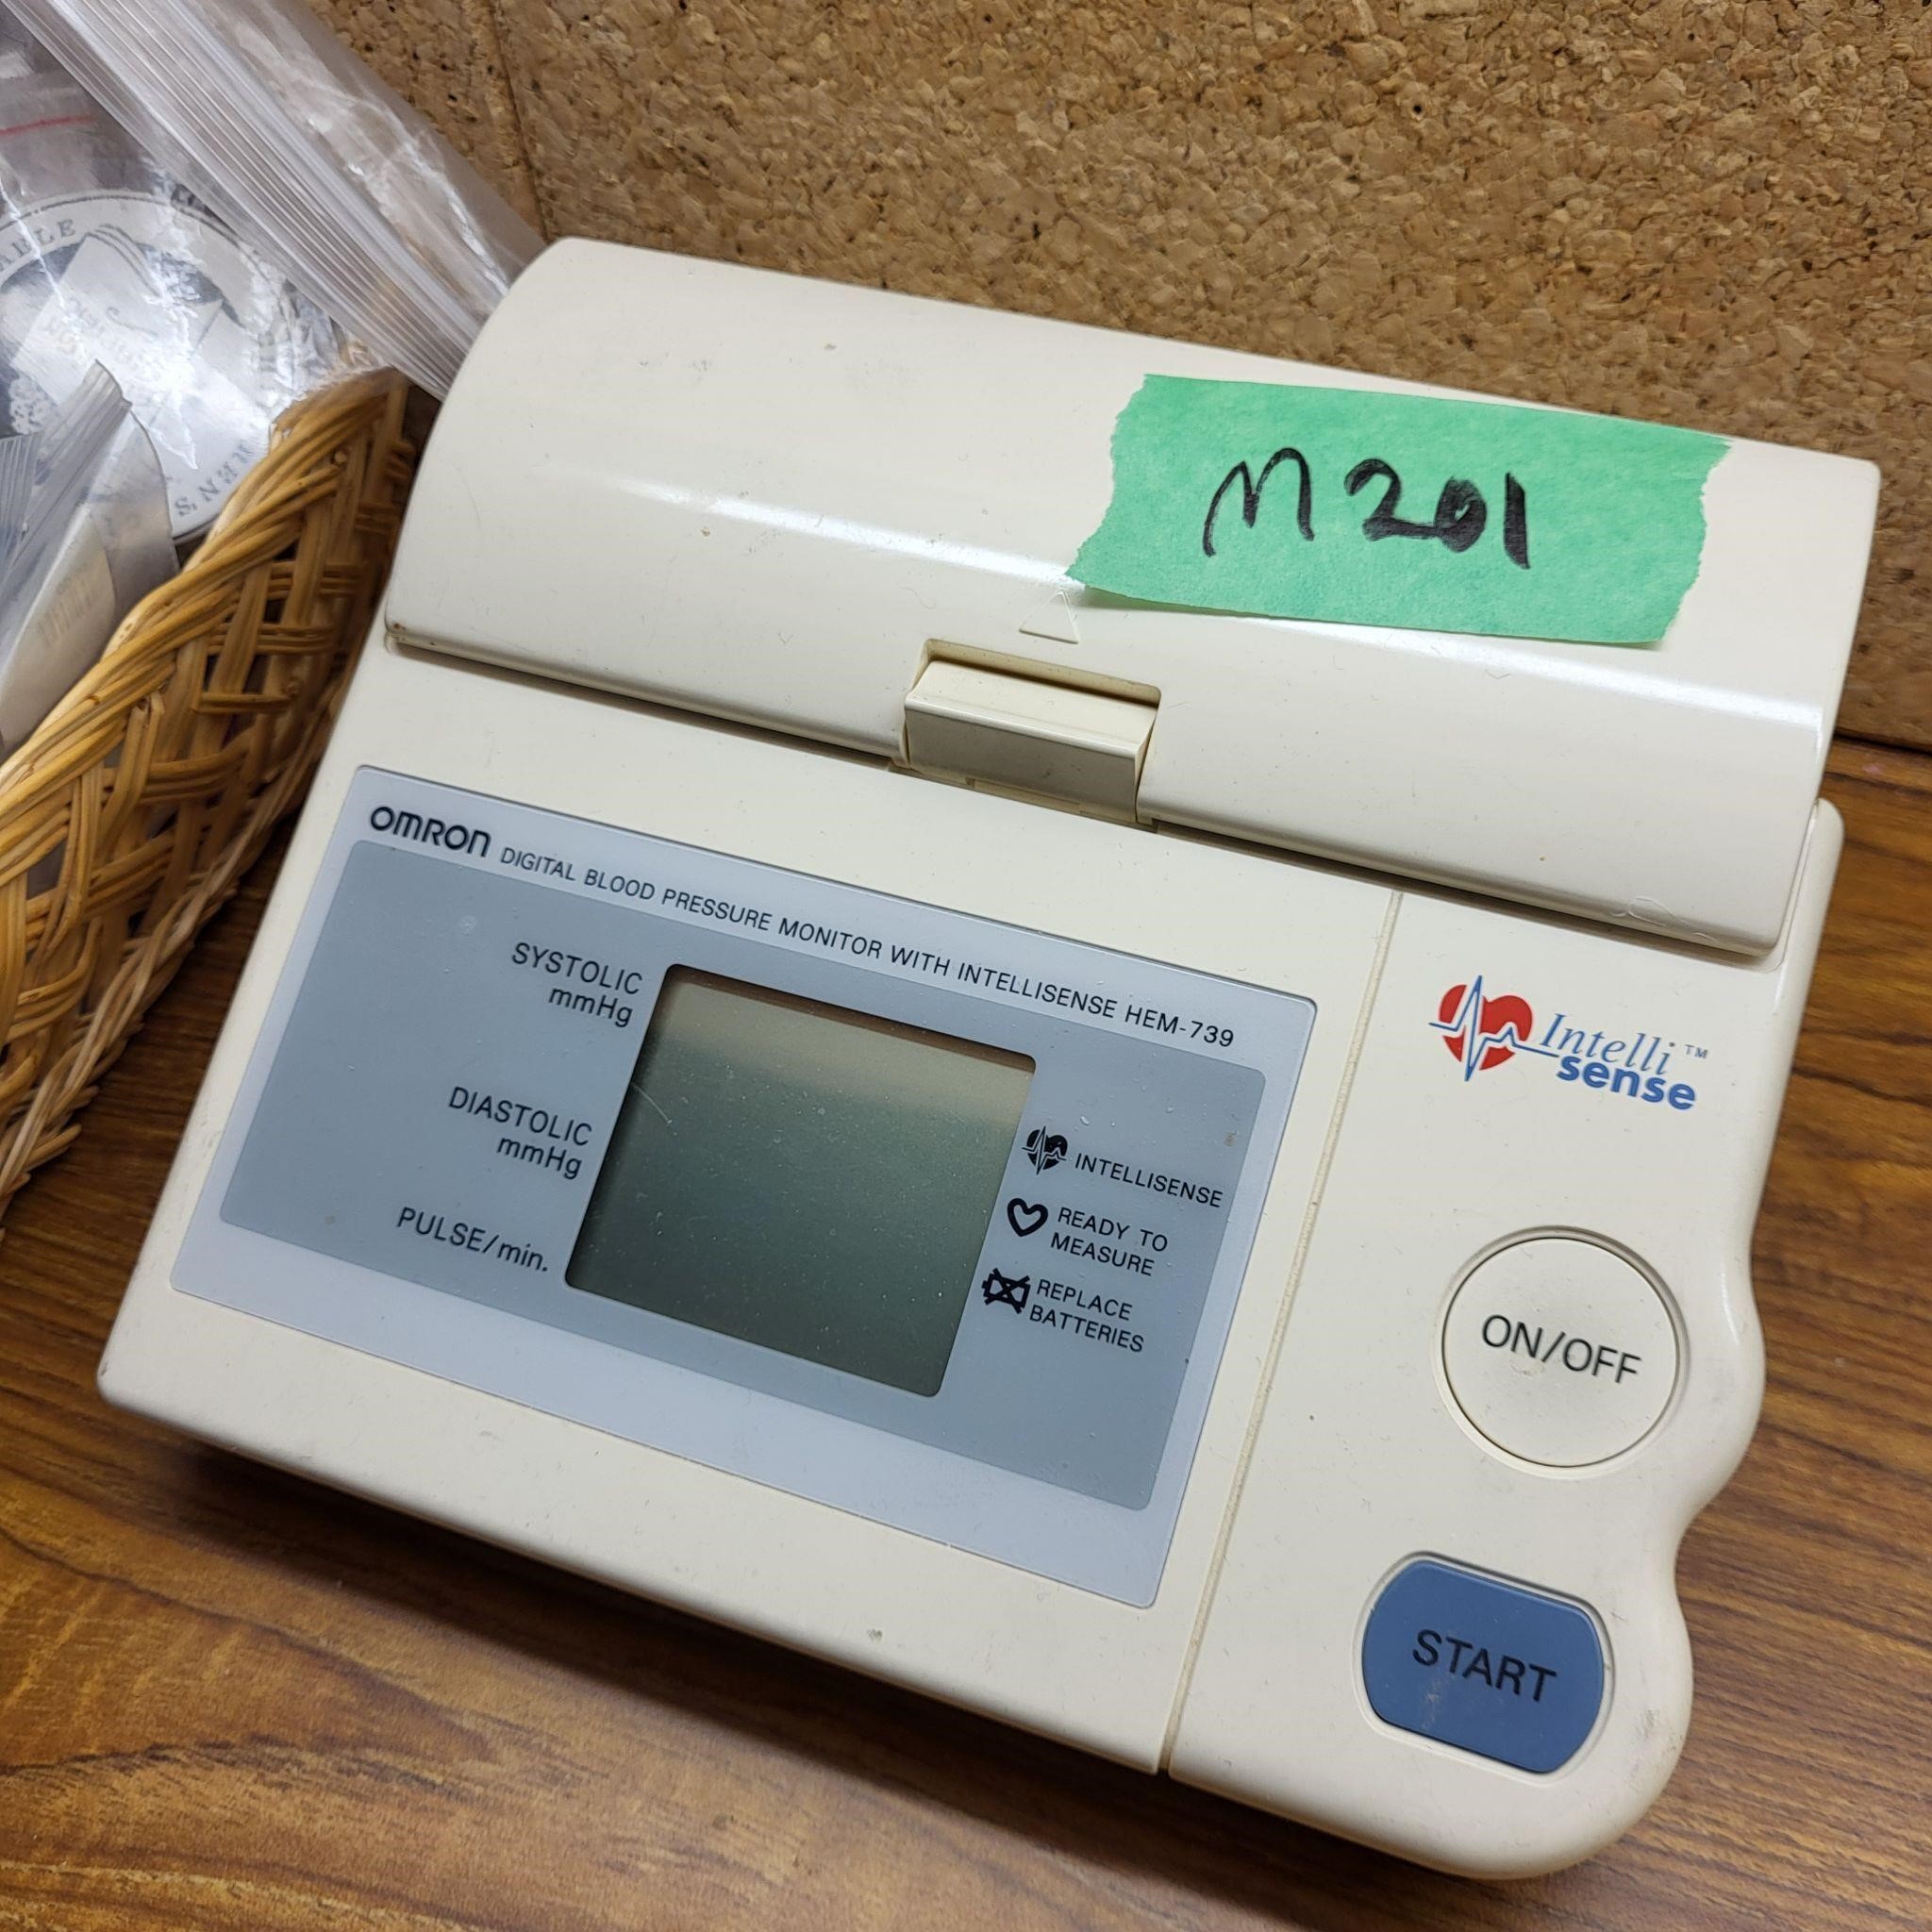 M201 Blood Pressure monitor